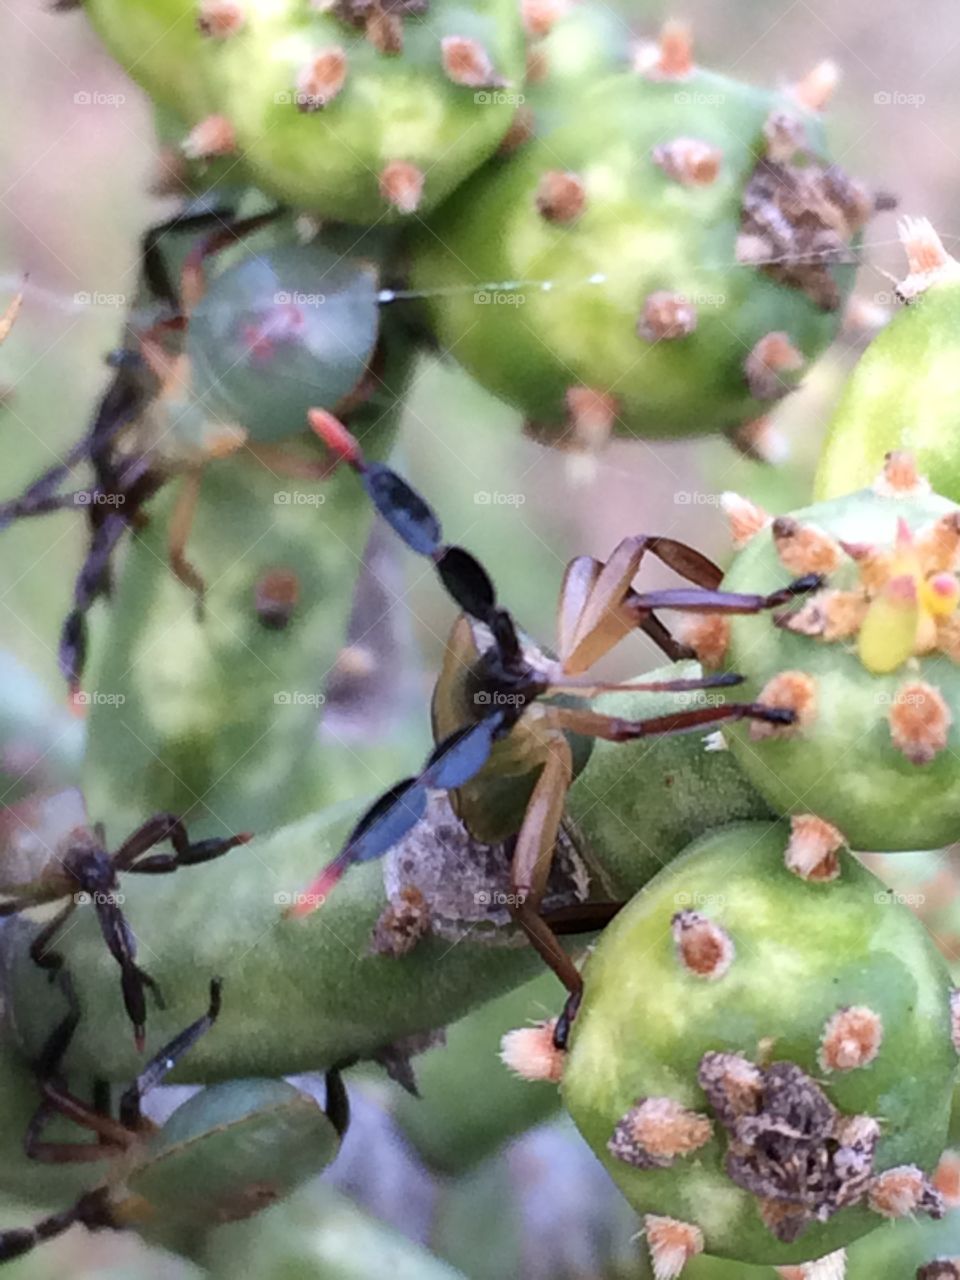 Getting Buggy. Bugs on cactus